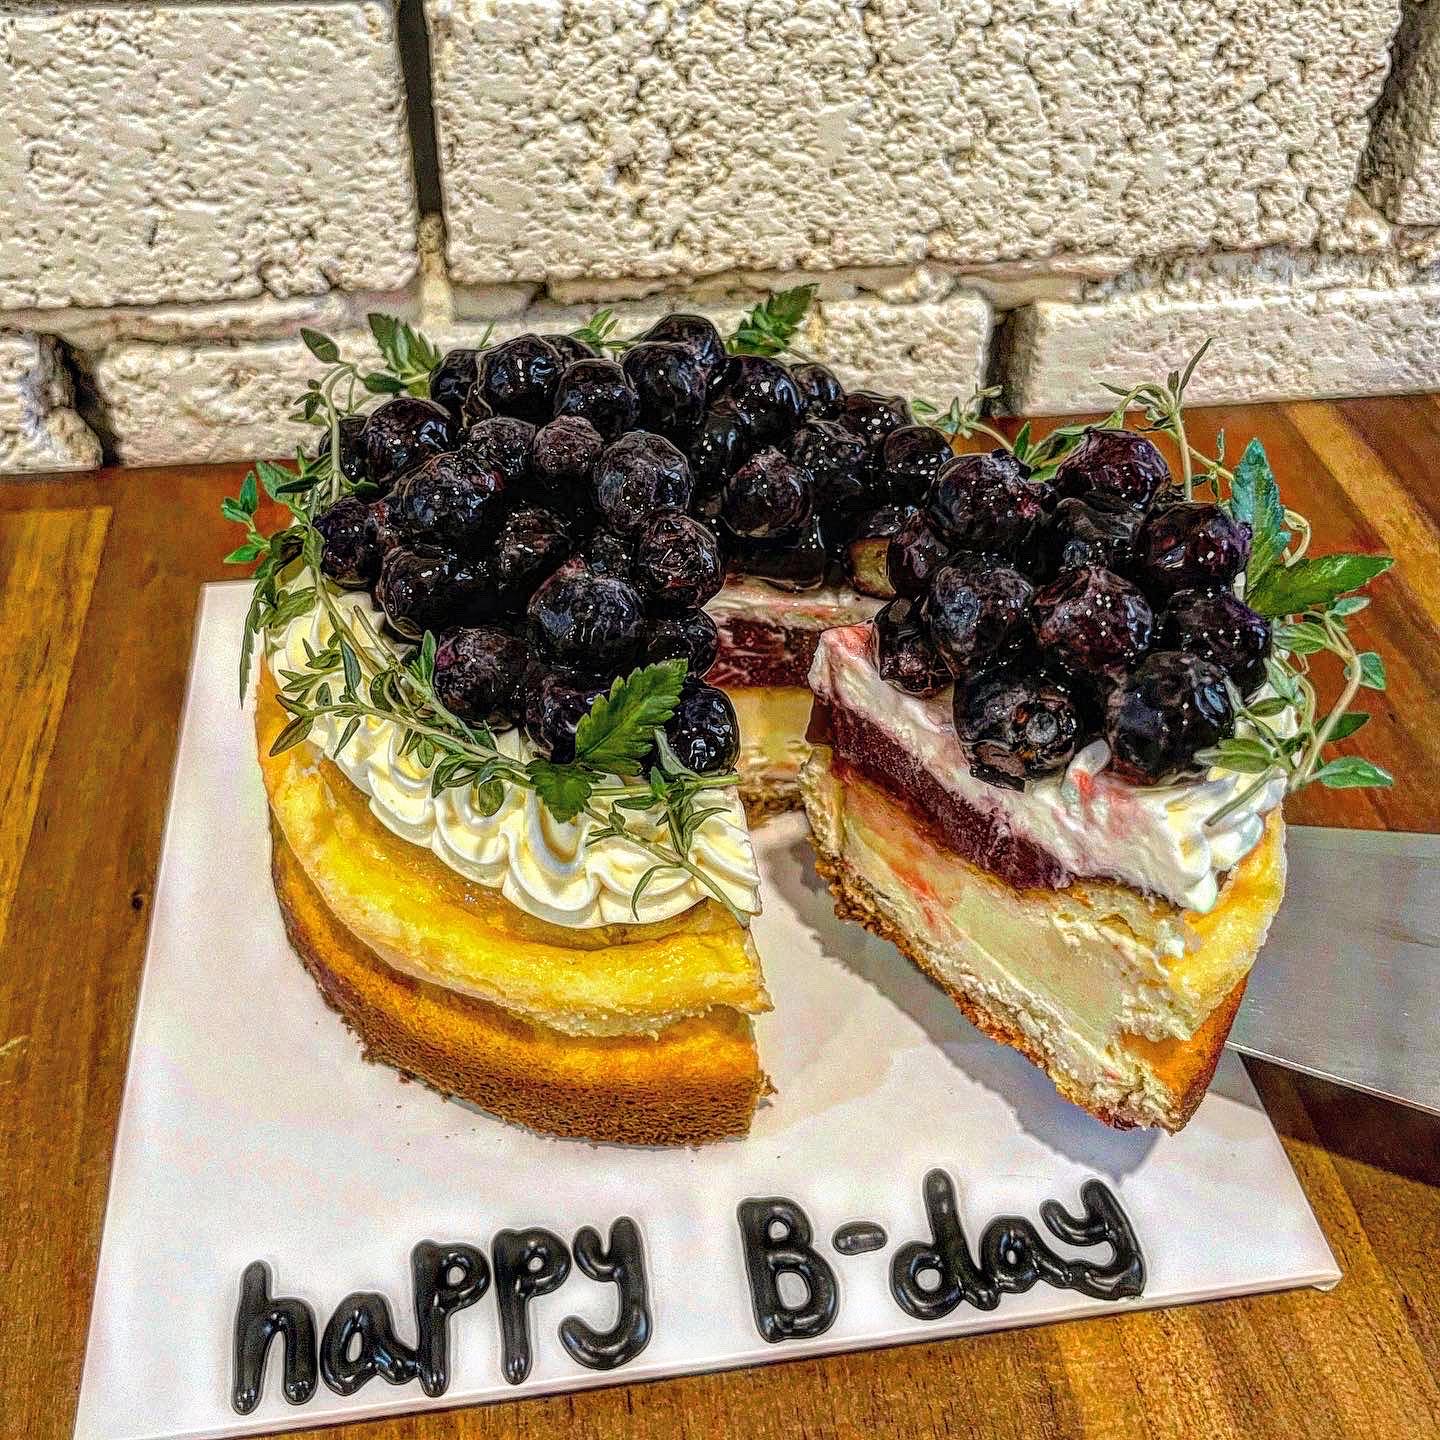 [Lotte] D-1 오늘주문,내일픽업 한판 케이크